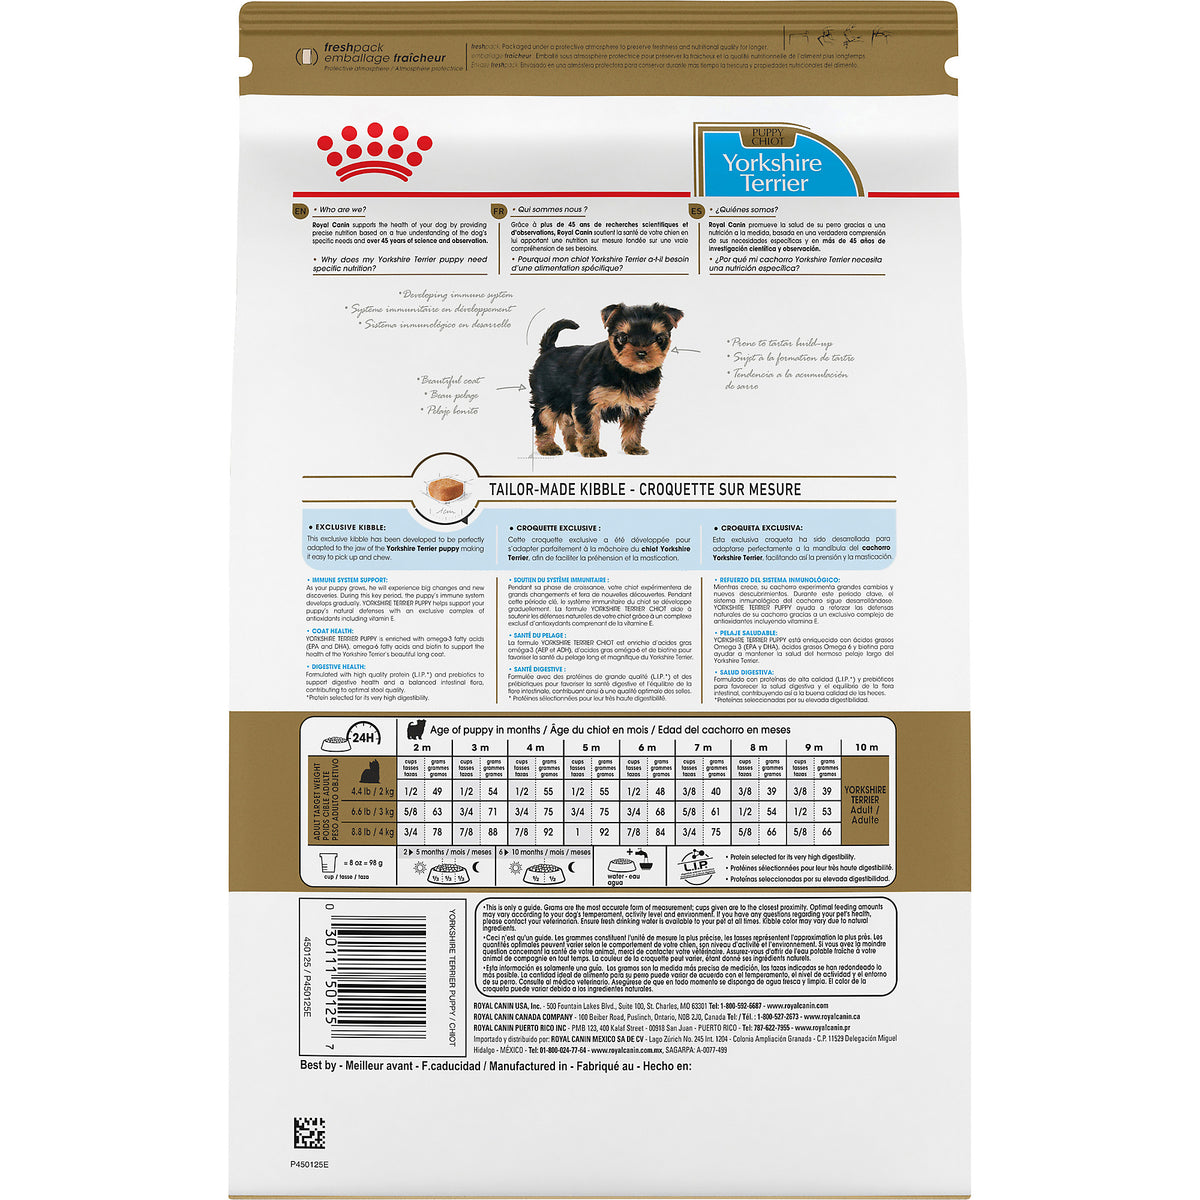 Royal Canin Yorkshire Terrier - Nourriture pour chiots